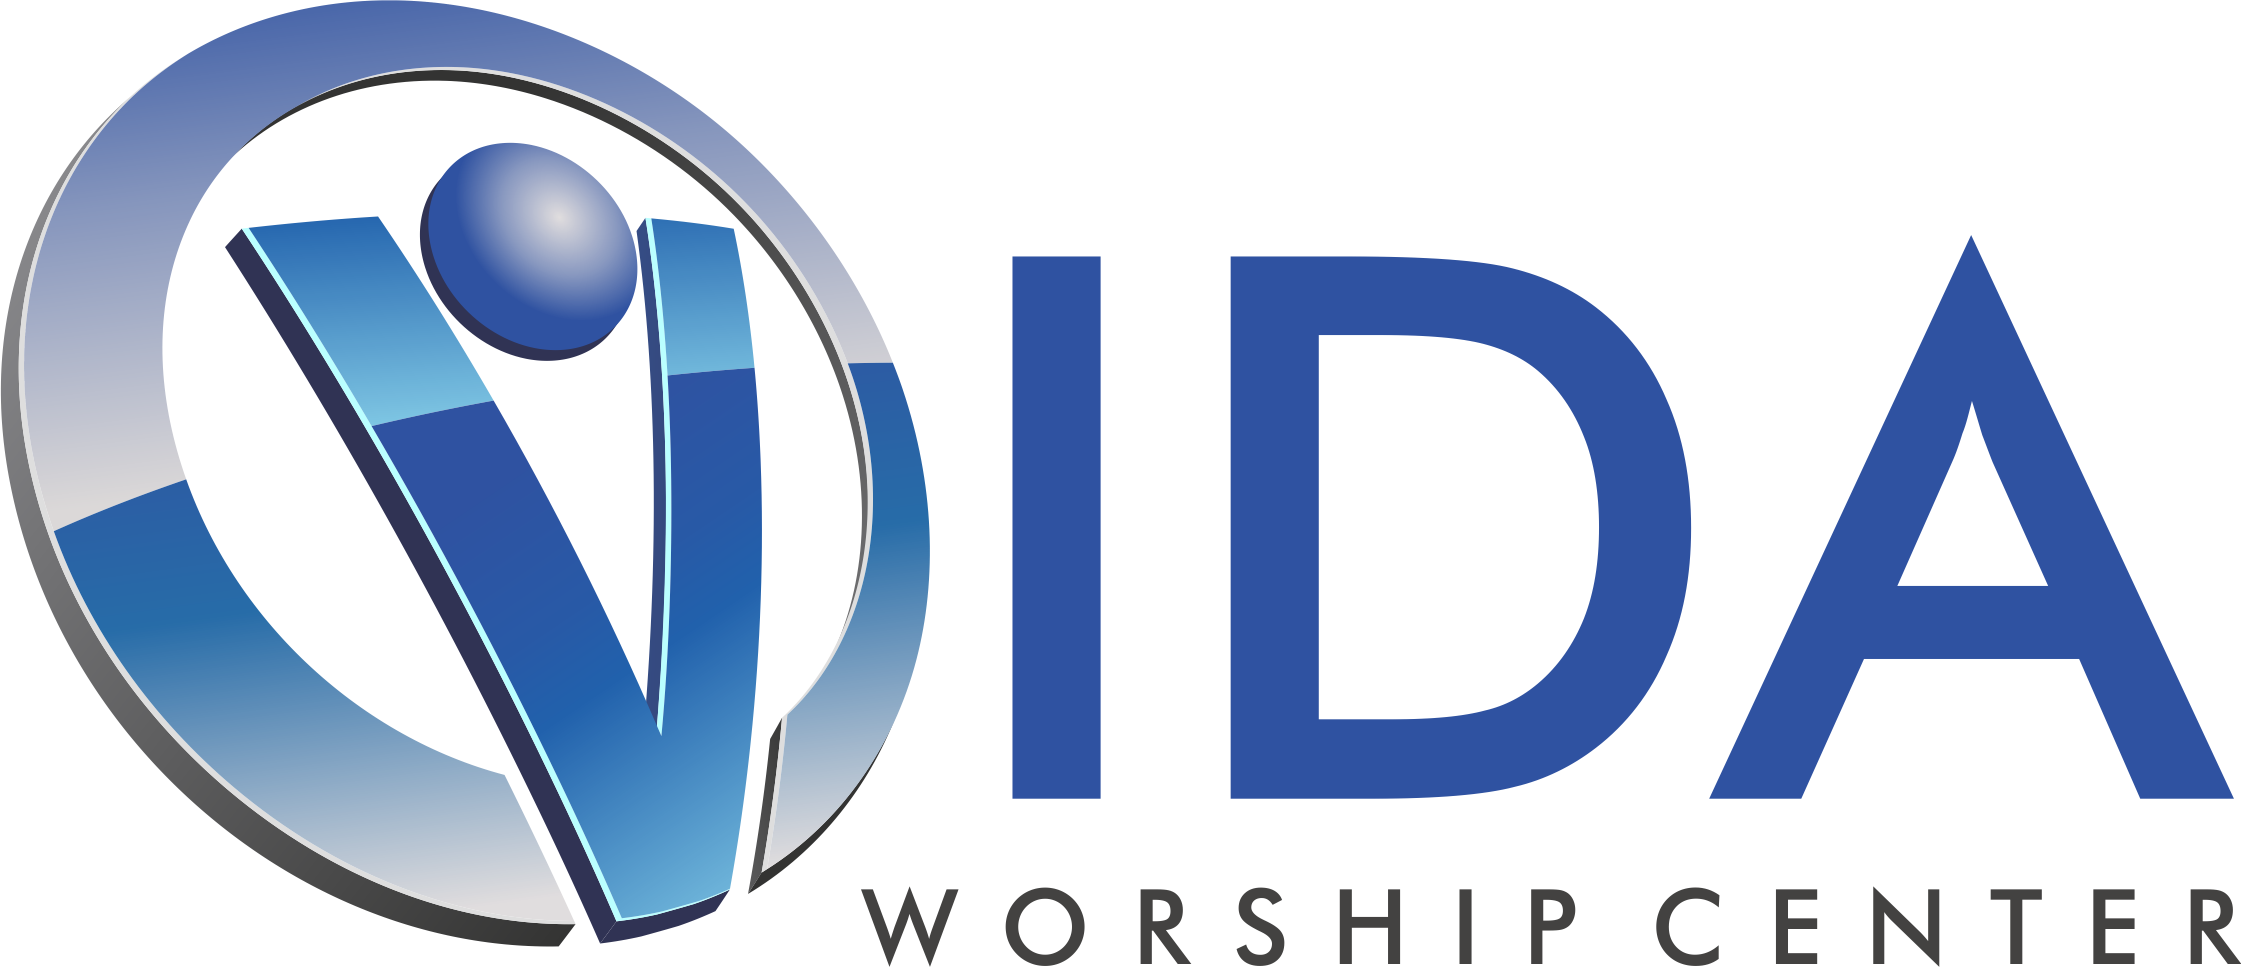 VIDA WORSHIP CENTER logo